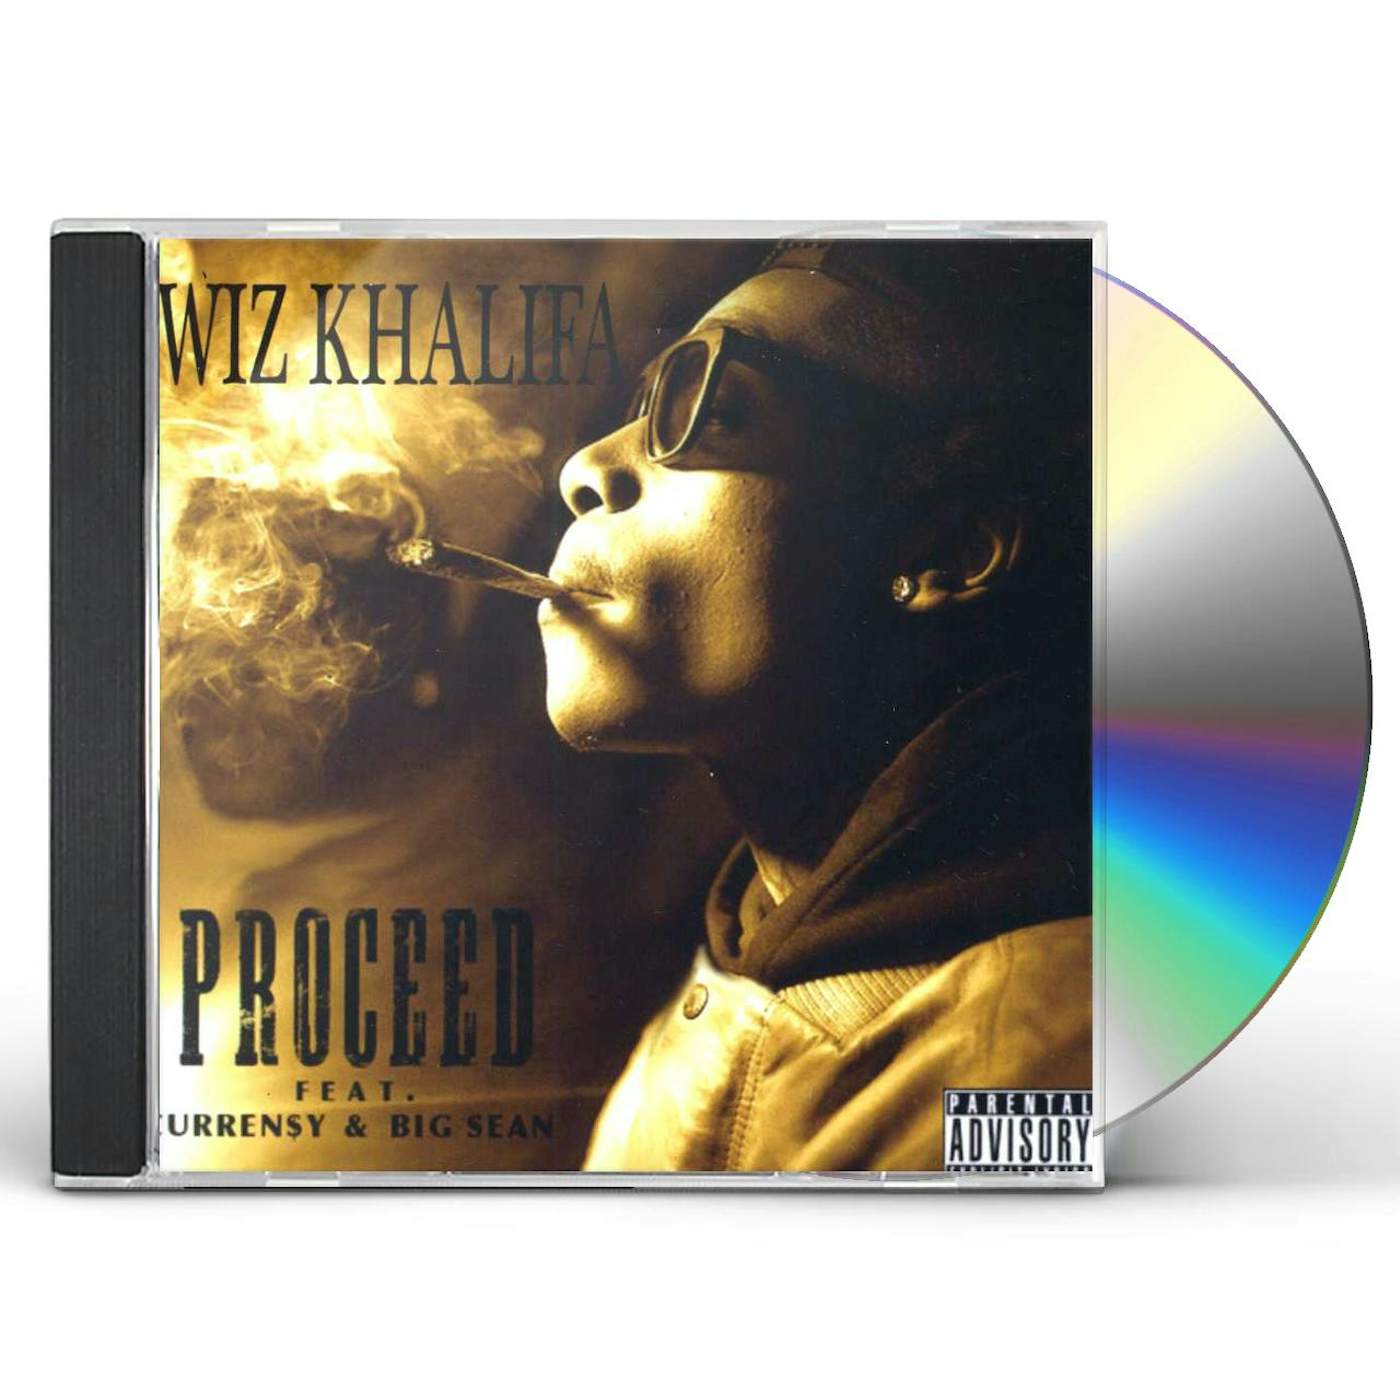 Wiz Khalifa PROCEED CD